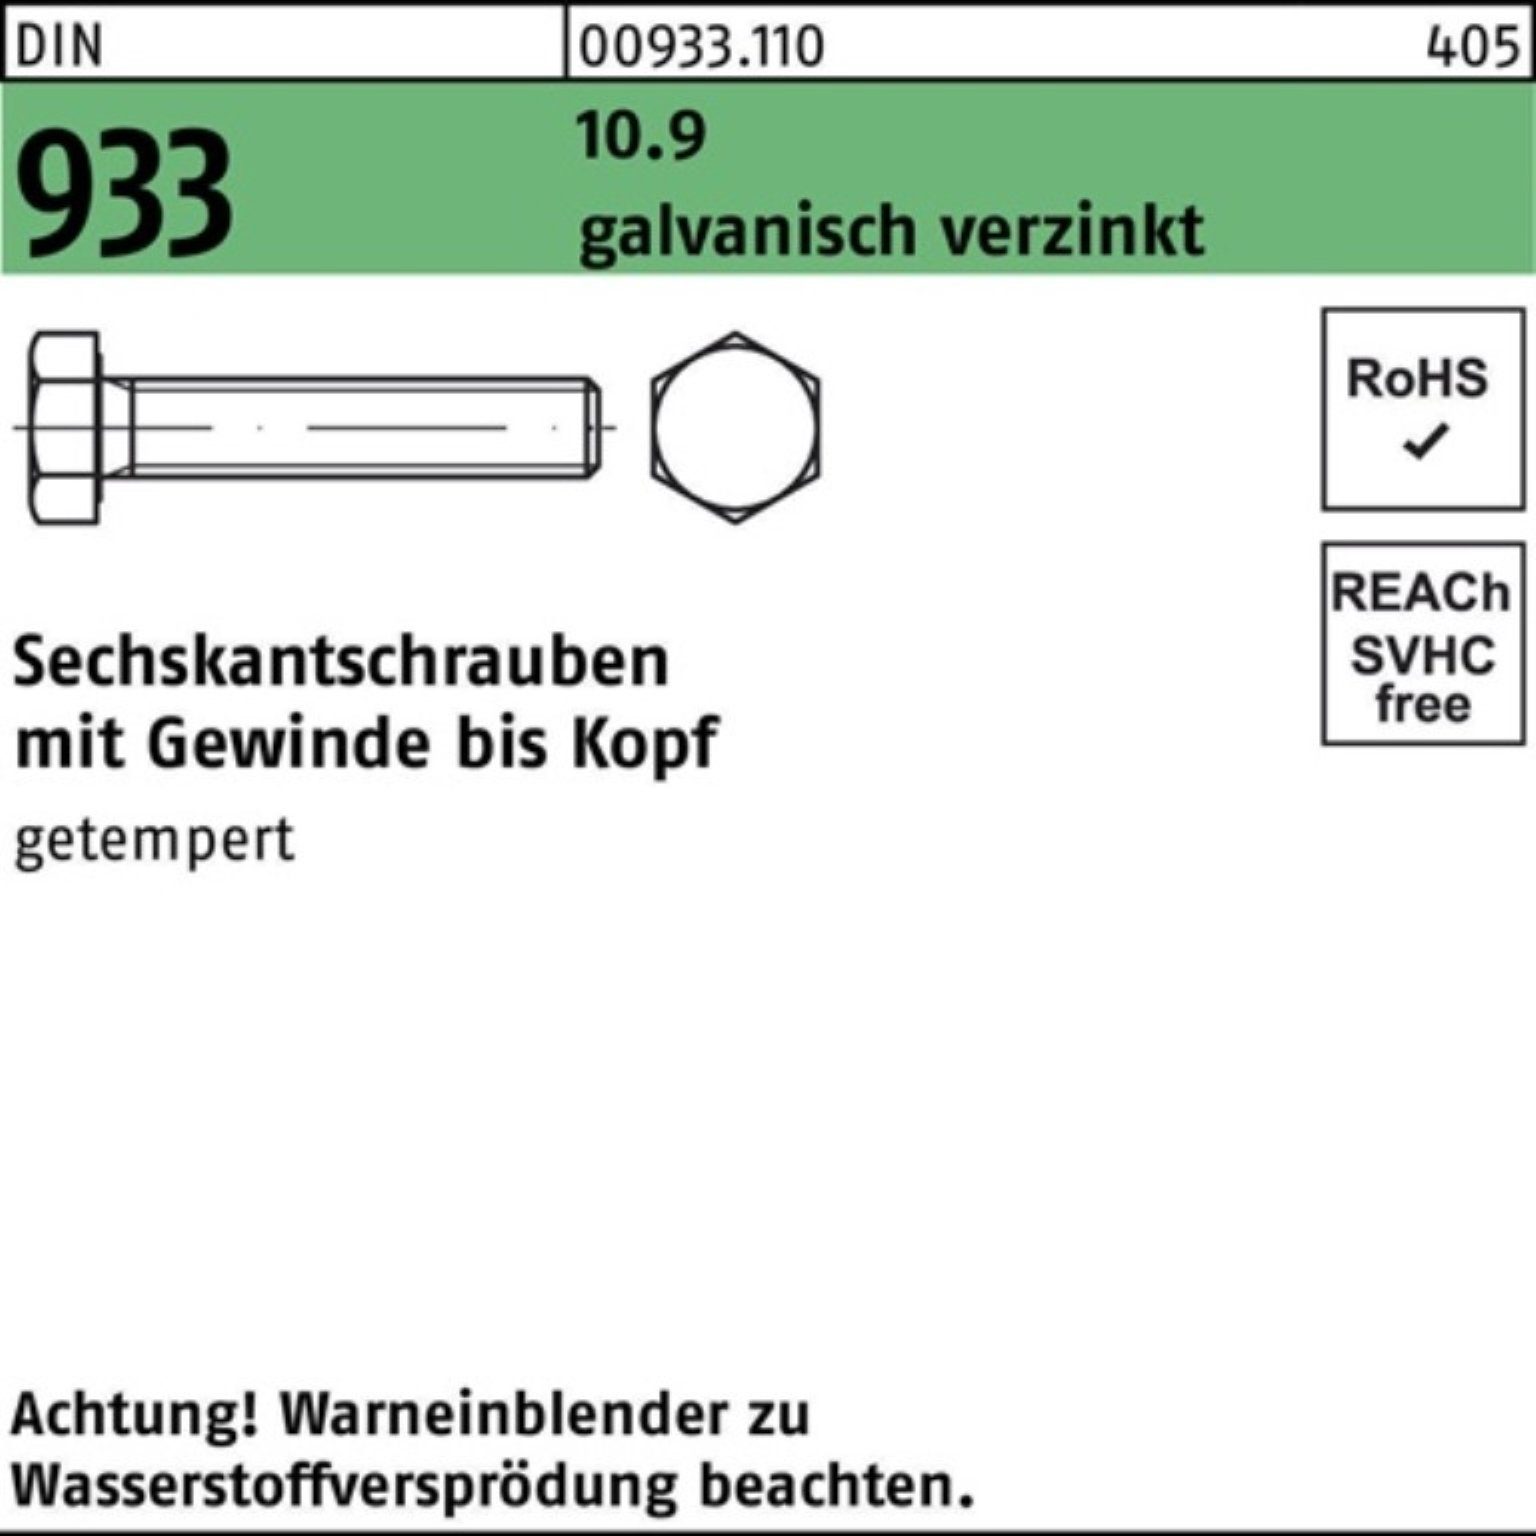 Reyher Sechskantschraube 200er Pack VG 18 galv.verz. 933 Sechskantschraube DIN M8x St 10.9 200